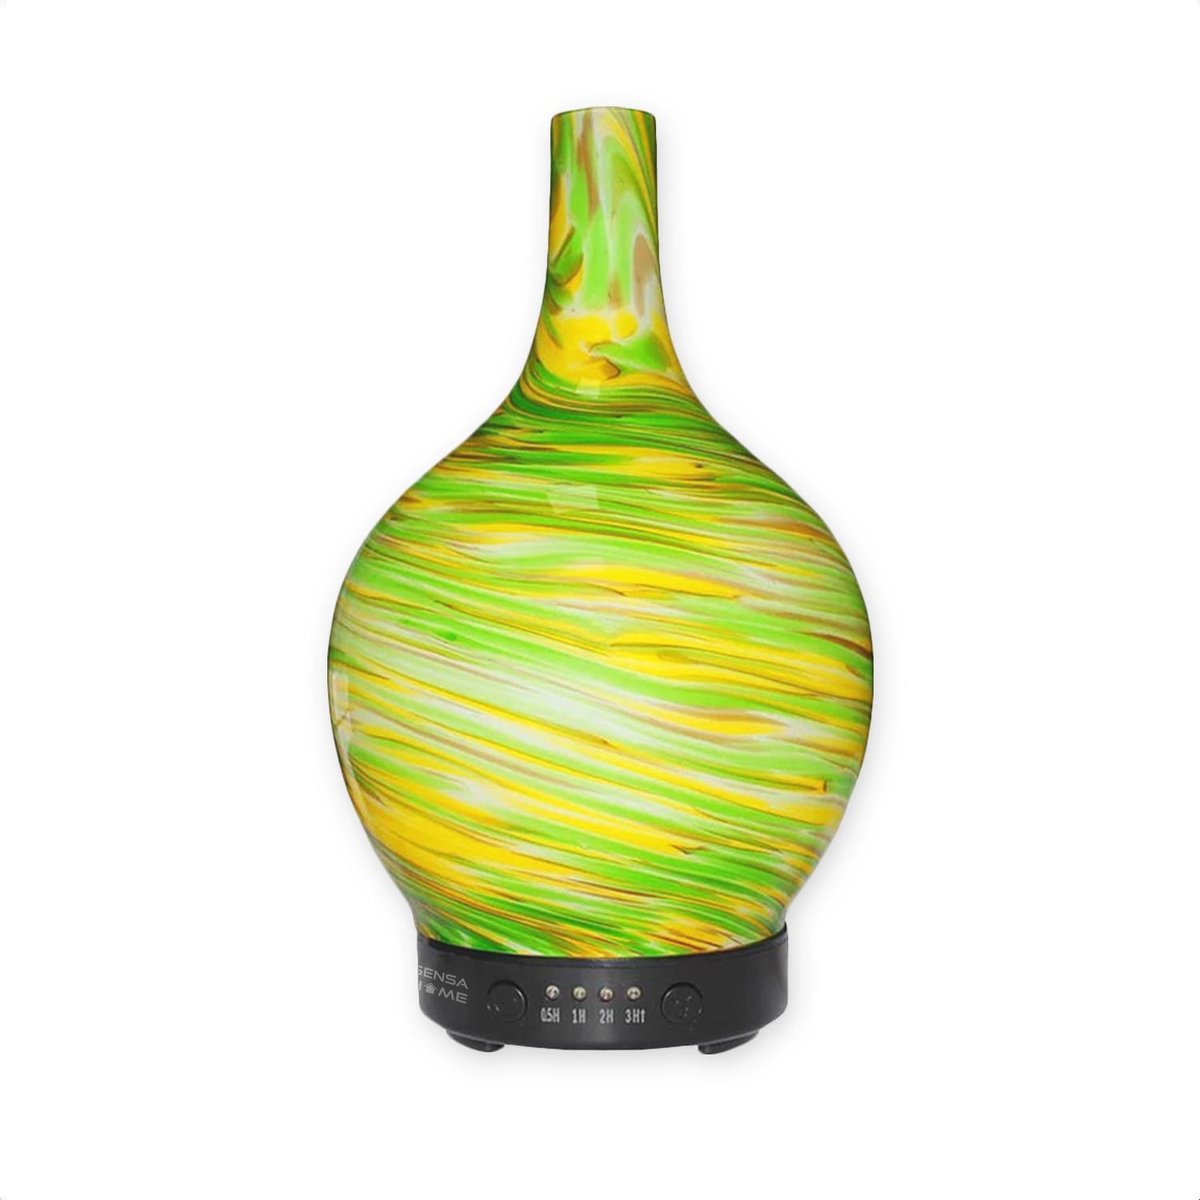 SensaHome Aroma Diffuser van Glas - 7 LED Kleuren - 100ml - Groen